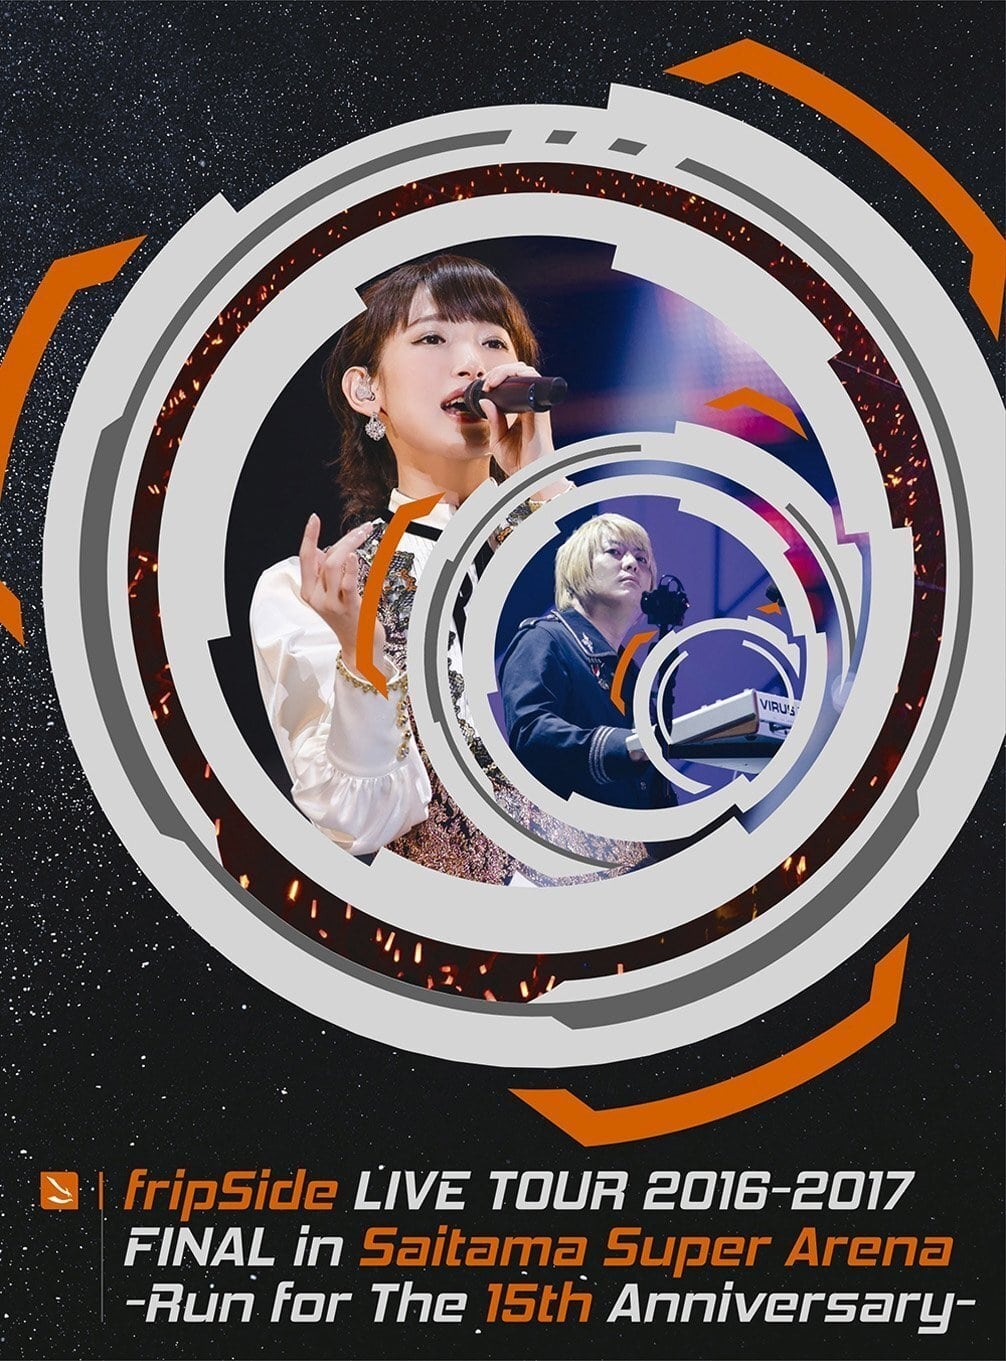 fripSide LIVE TOUR 2016-2017 FINAL in Saitama Super Arena -Run for the 15th Anniversary-